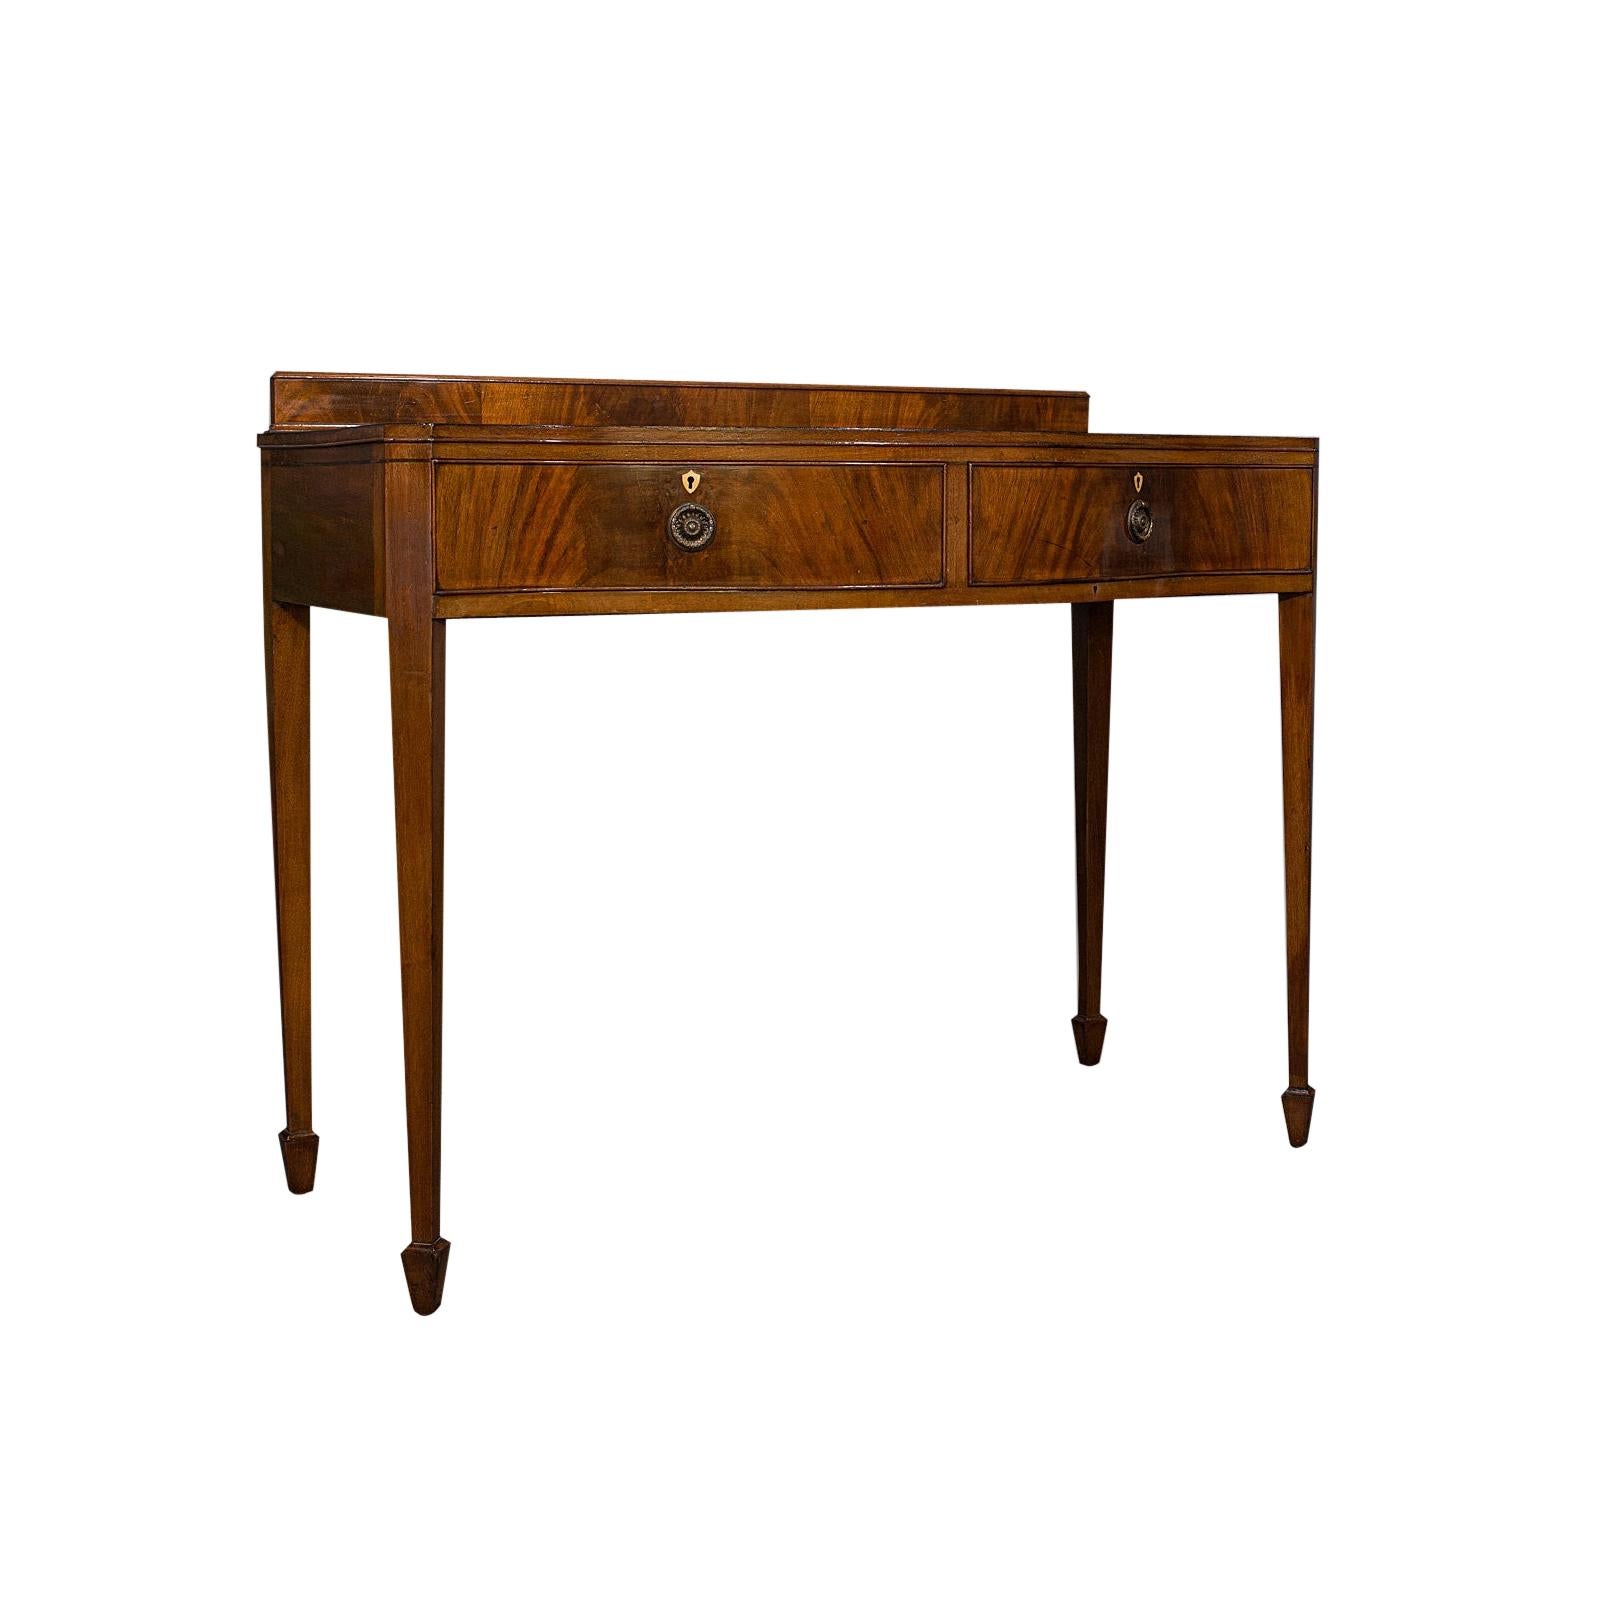 Antique Side Table, English, Mahogany, Buffet, Server, Hamptons, Edwardian, 1910 For Sale